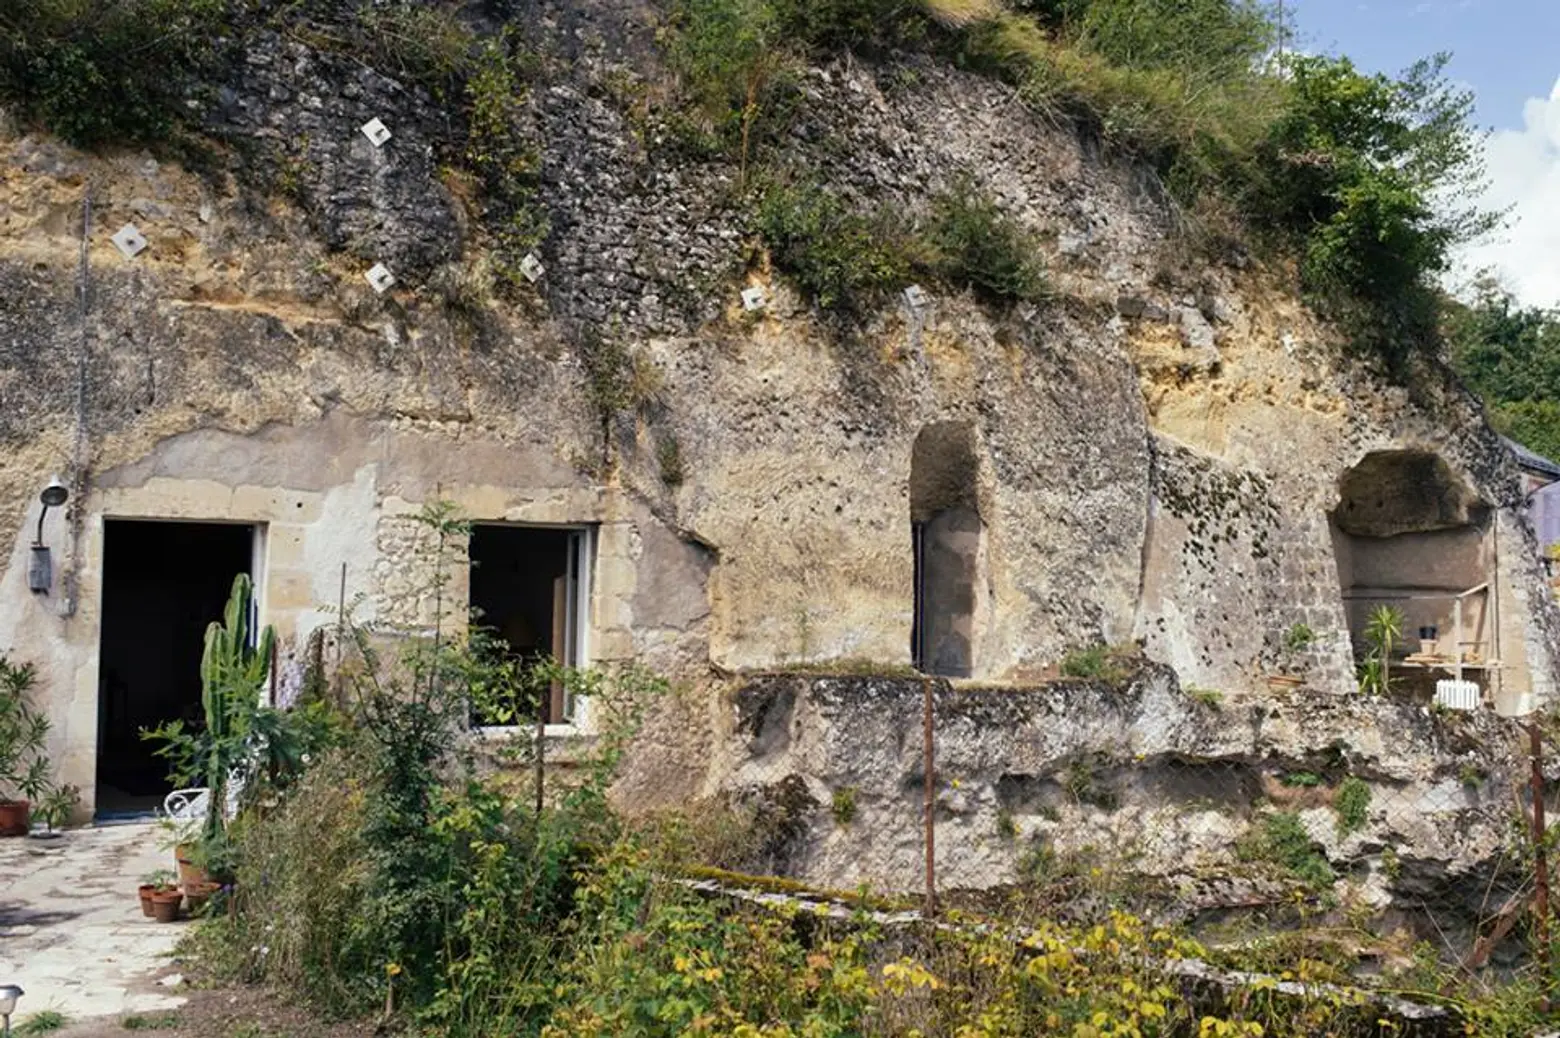 Chez Helene Amboise Troglodyte, French Cave, Troglodyte home, cool dwelling